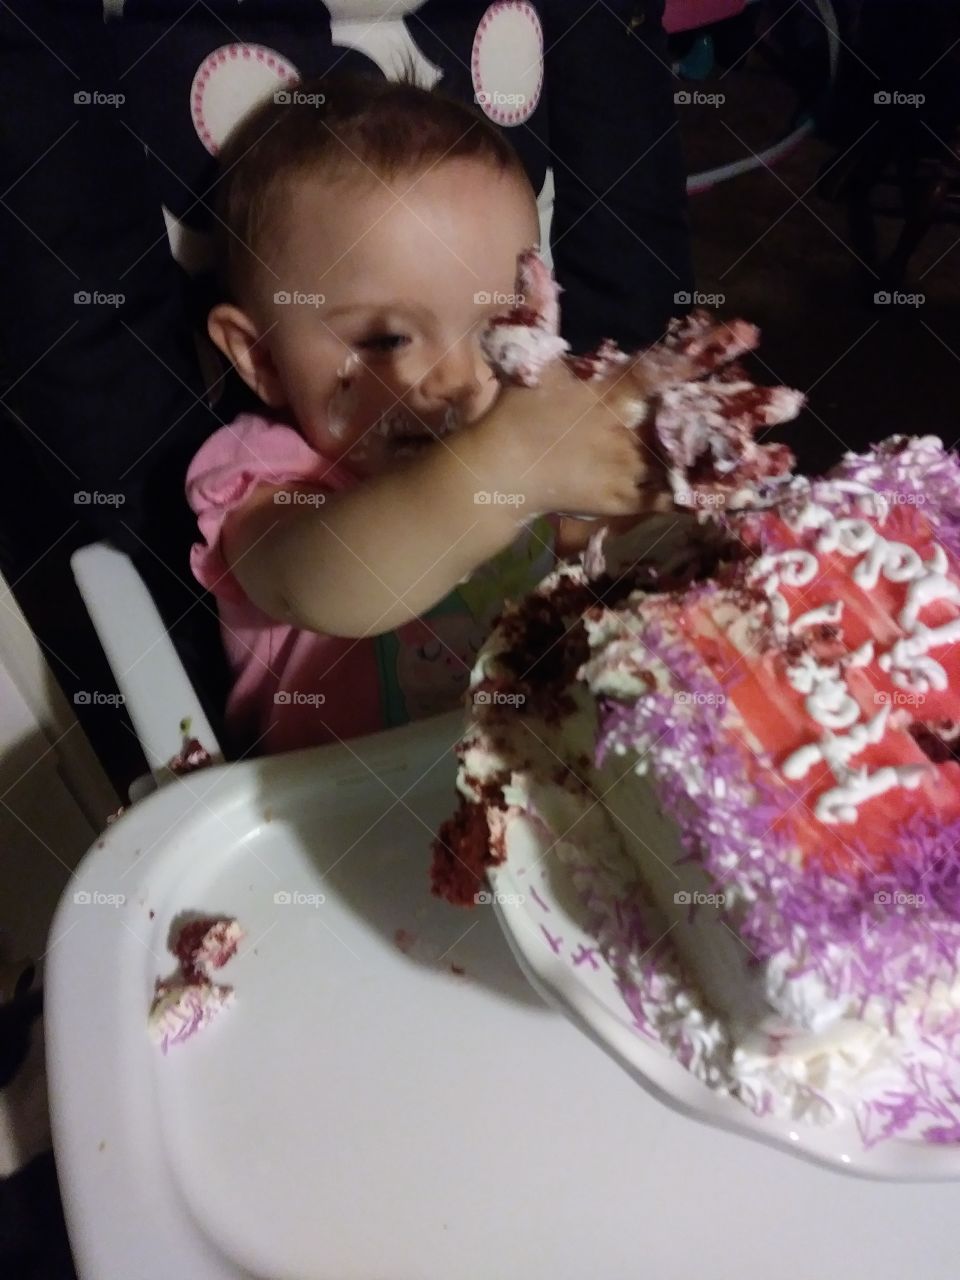 did someone say cake?!